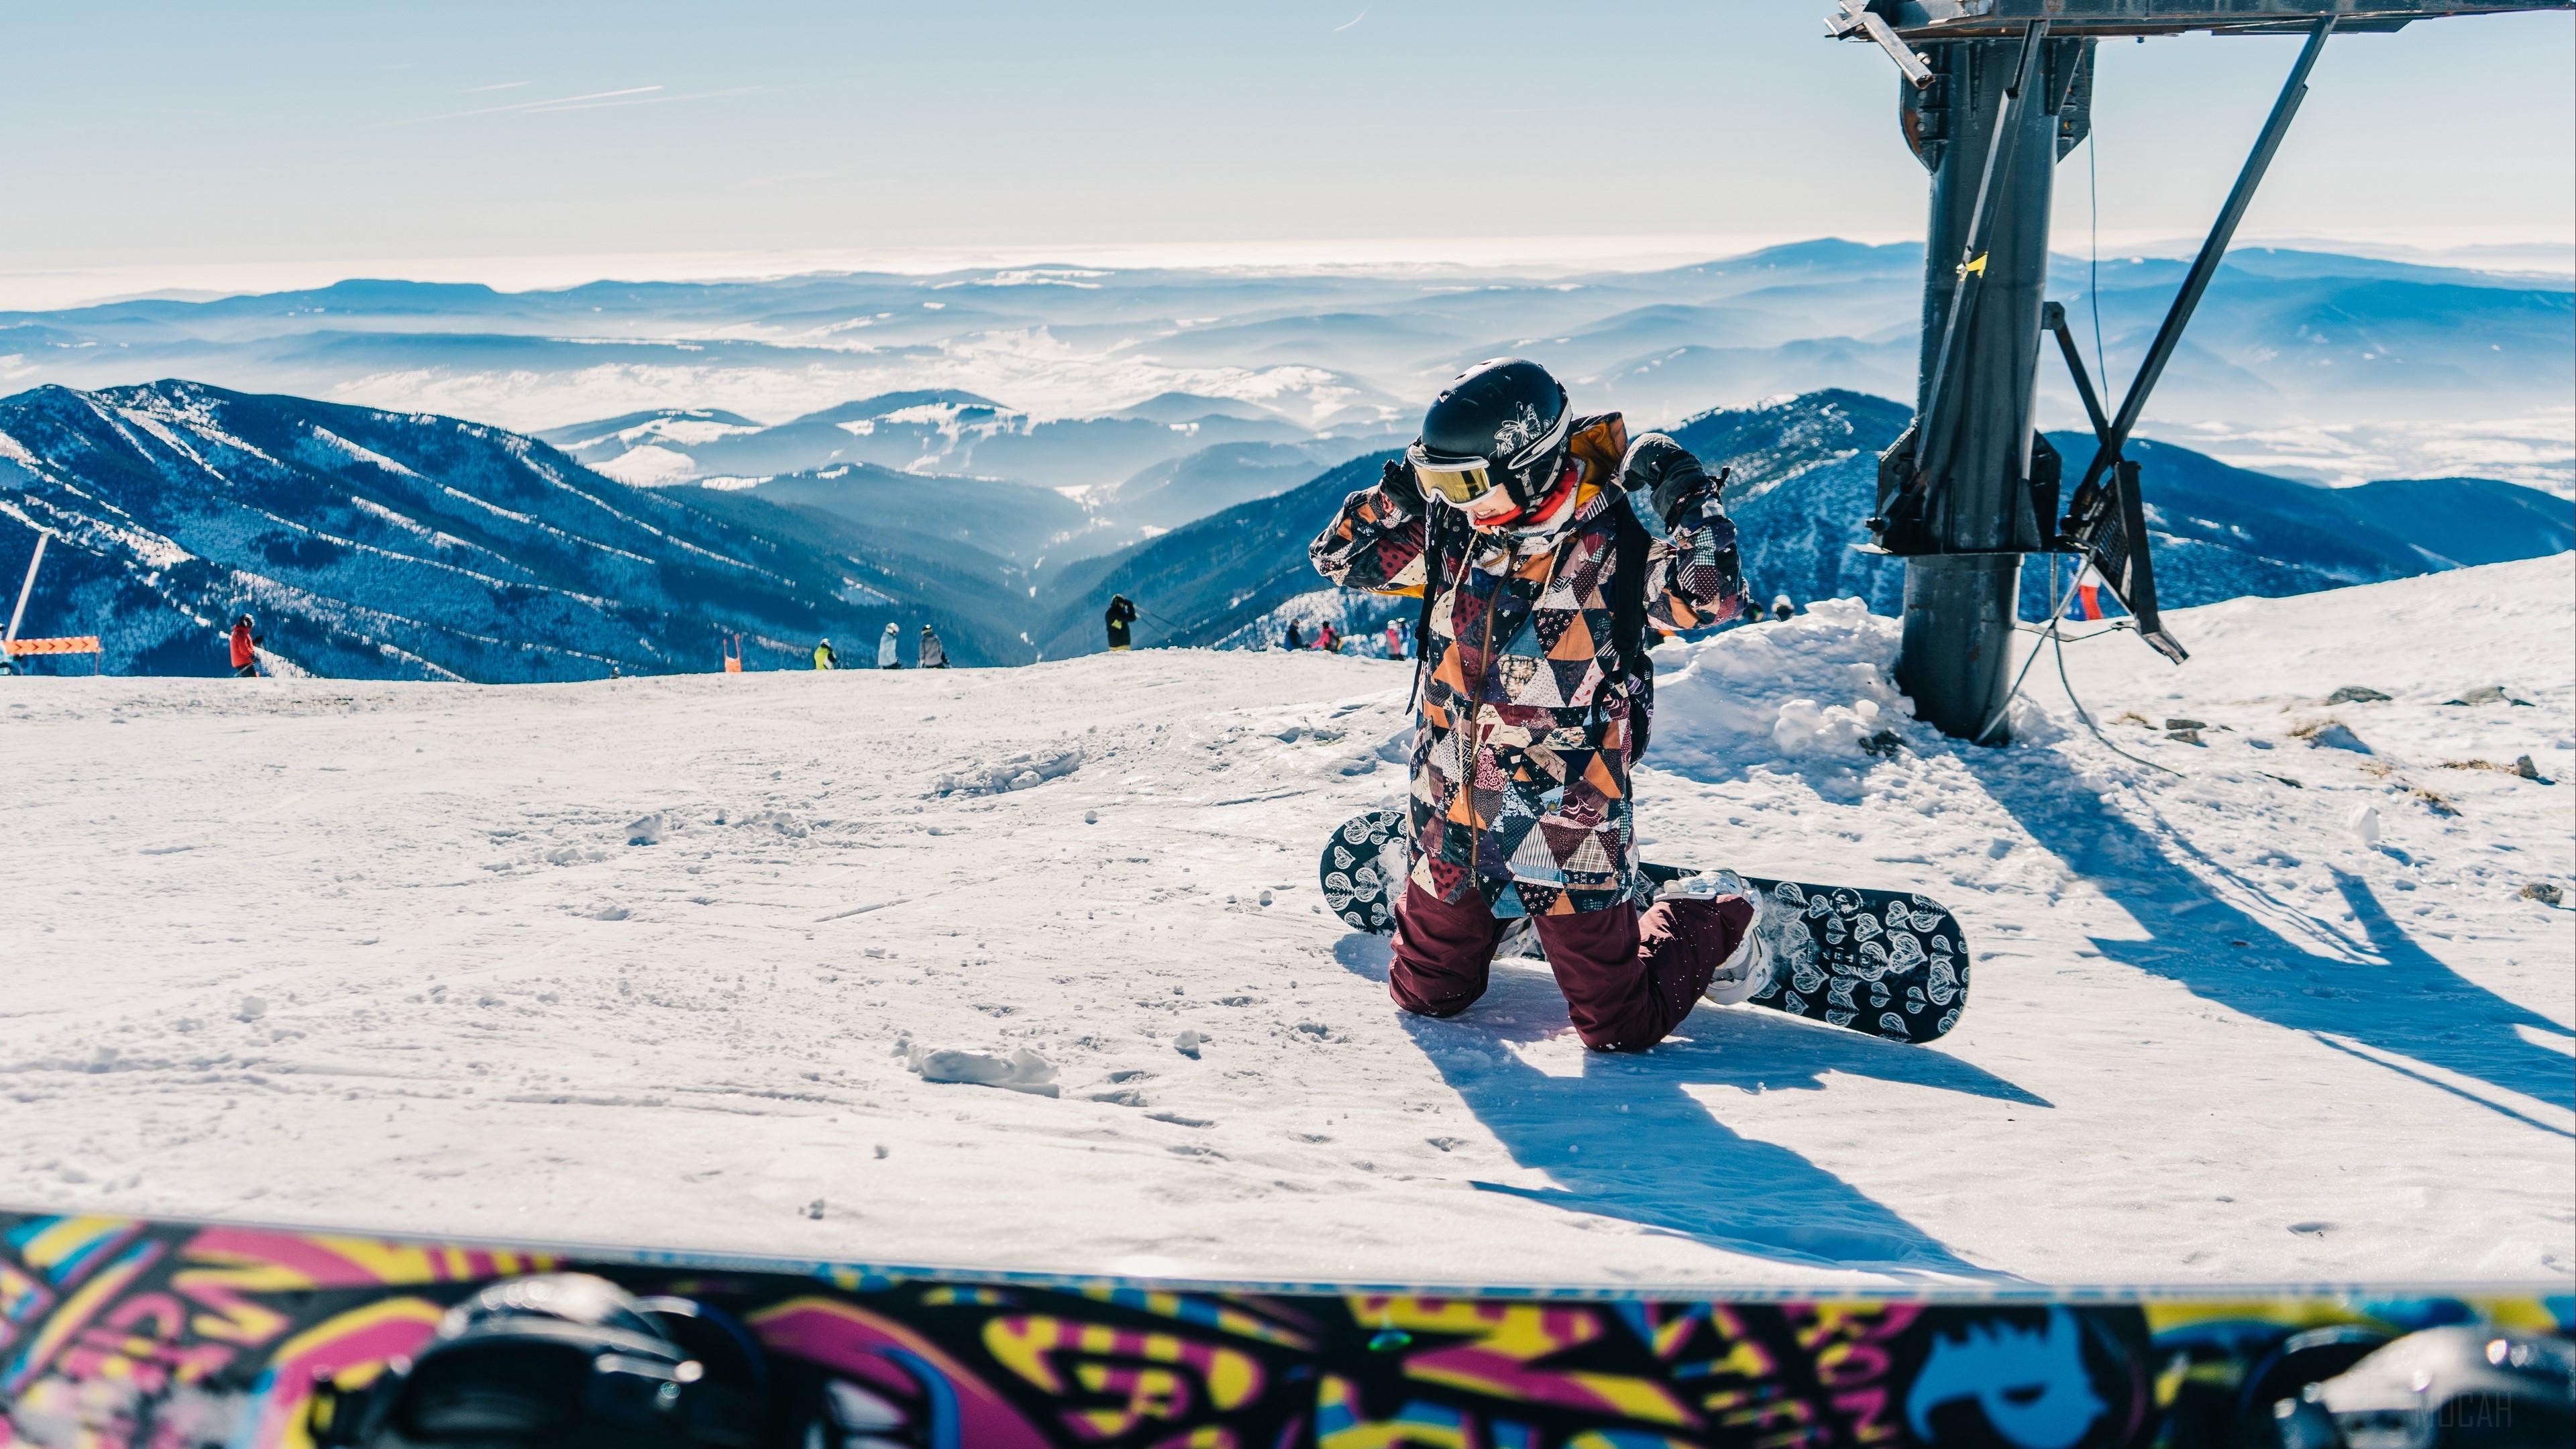 HD wallpaper, Snowboarding, Snow 4K, Snowboarder, Mountain